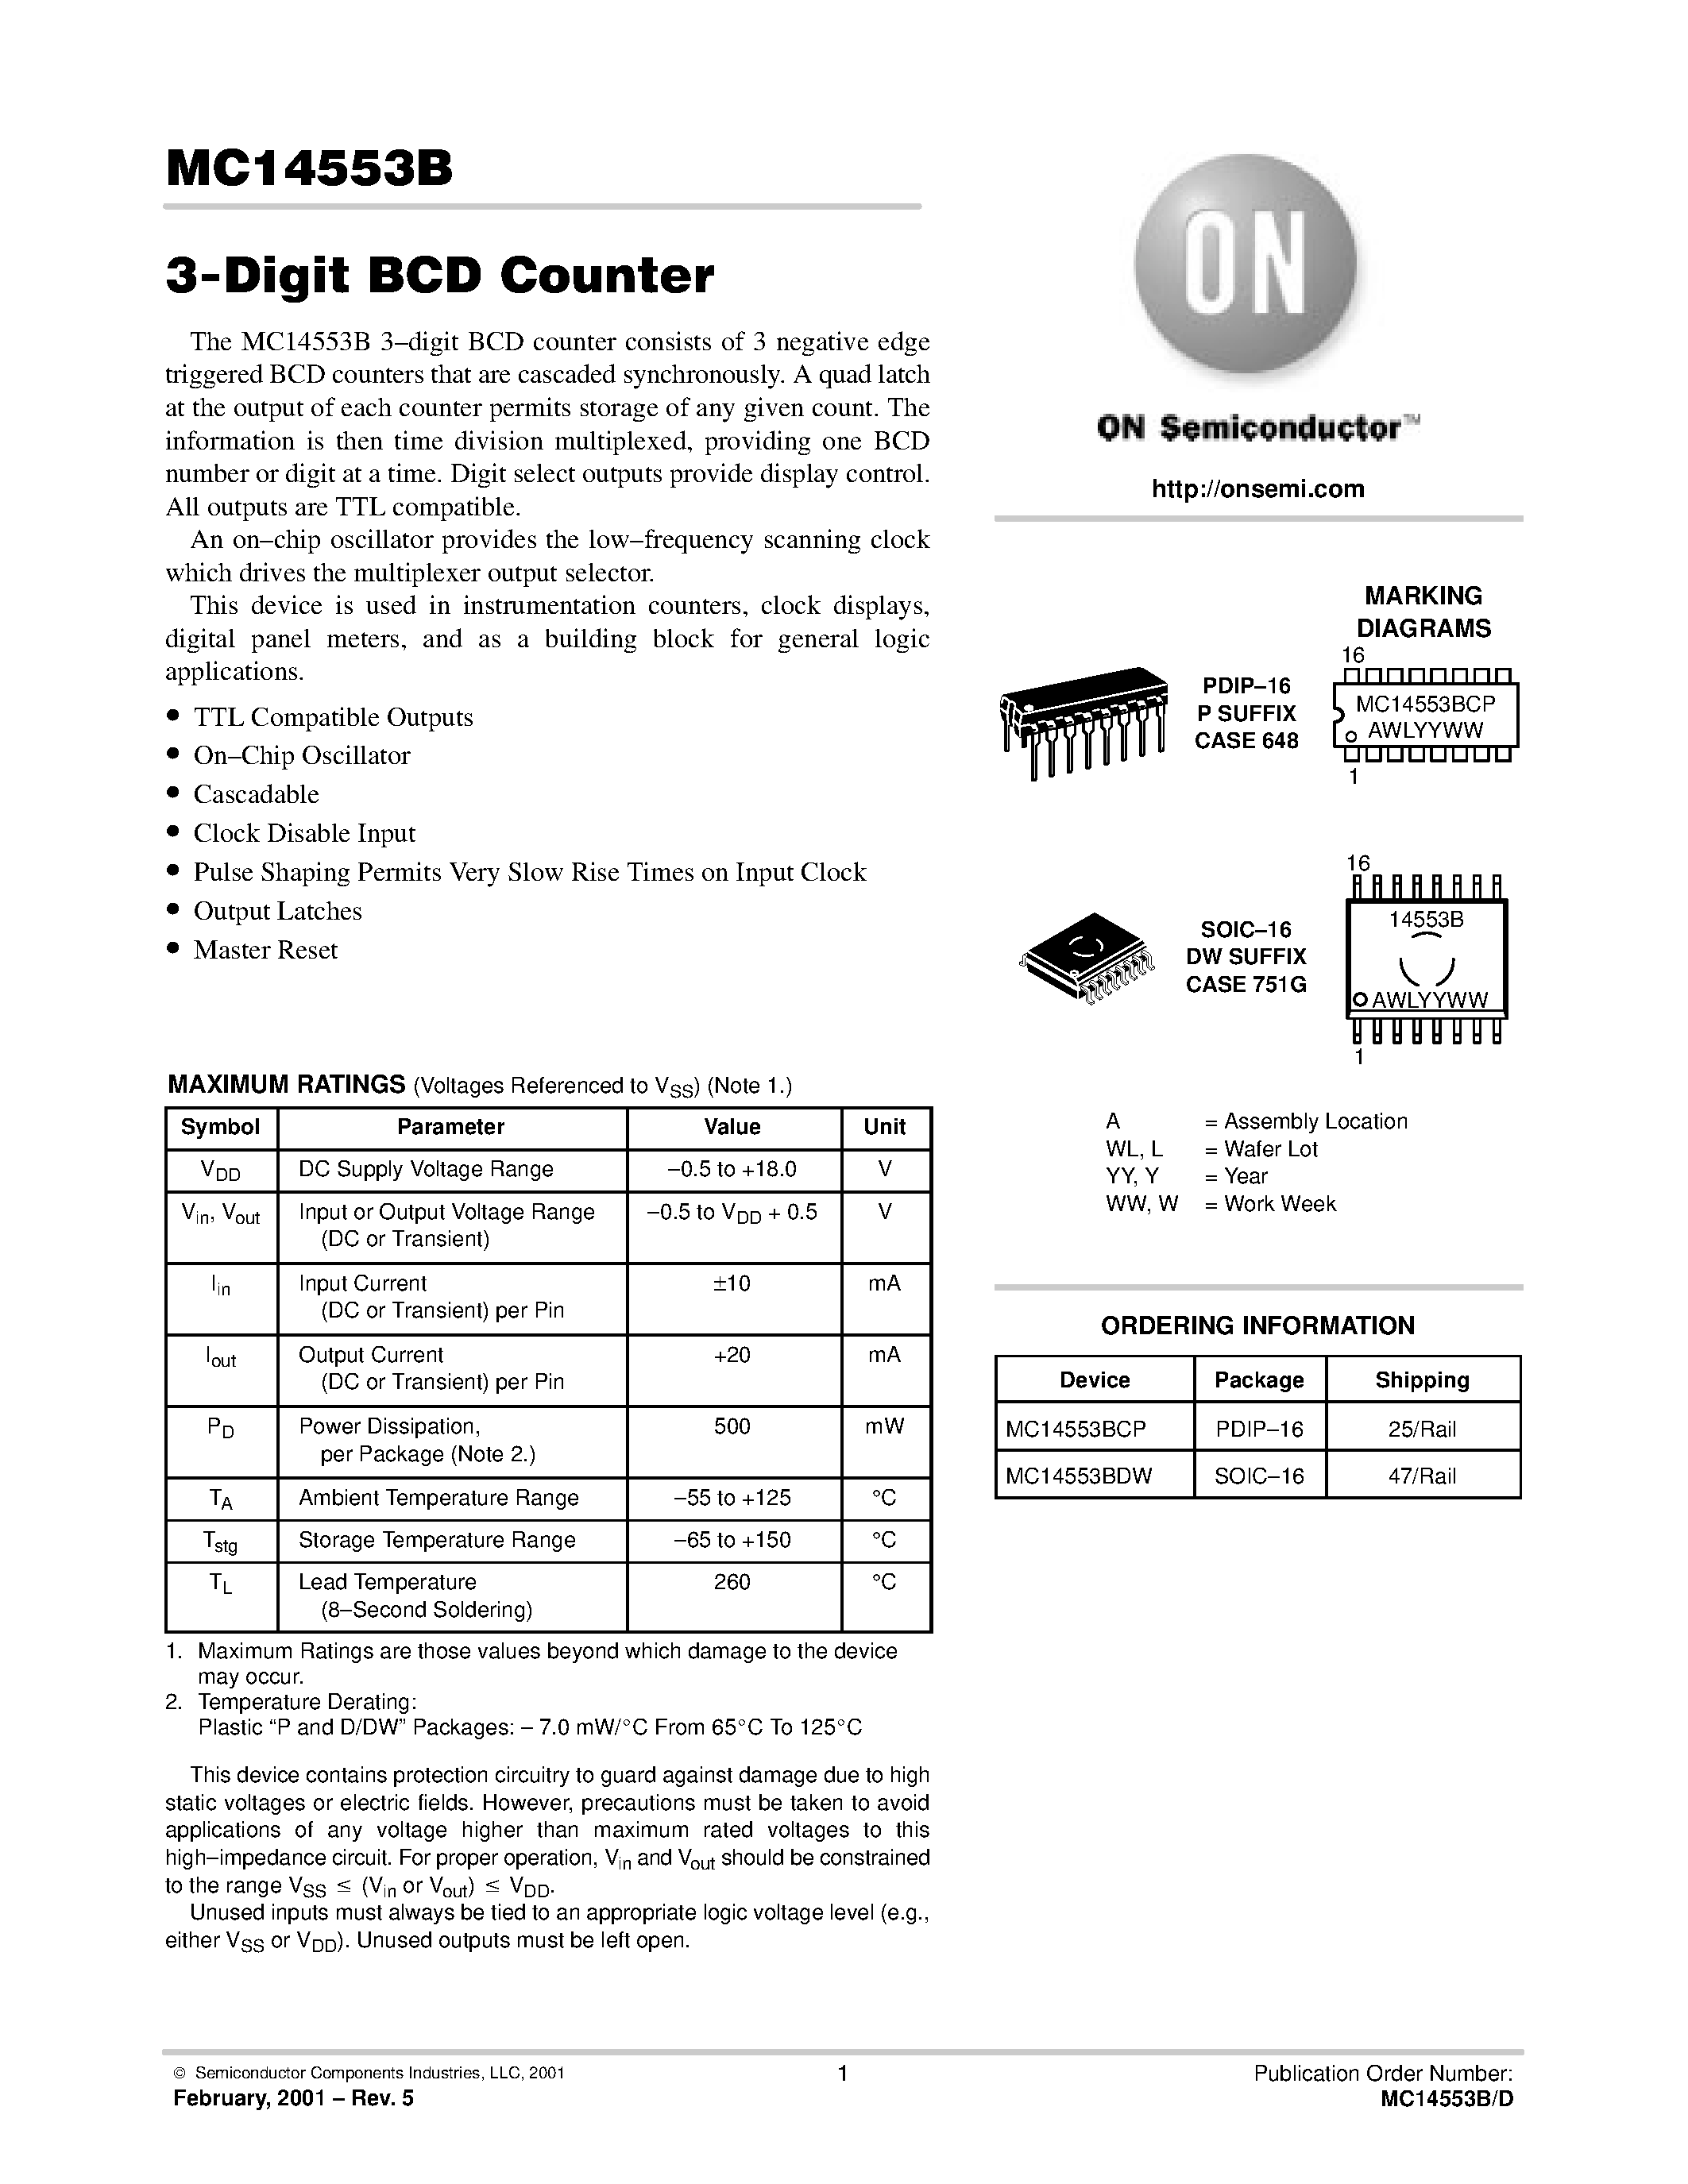 Datasheet CD4553 - (MC14553B) 3 Digit BCD Counter page 1